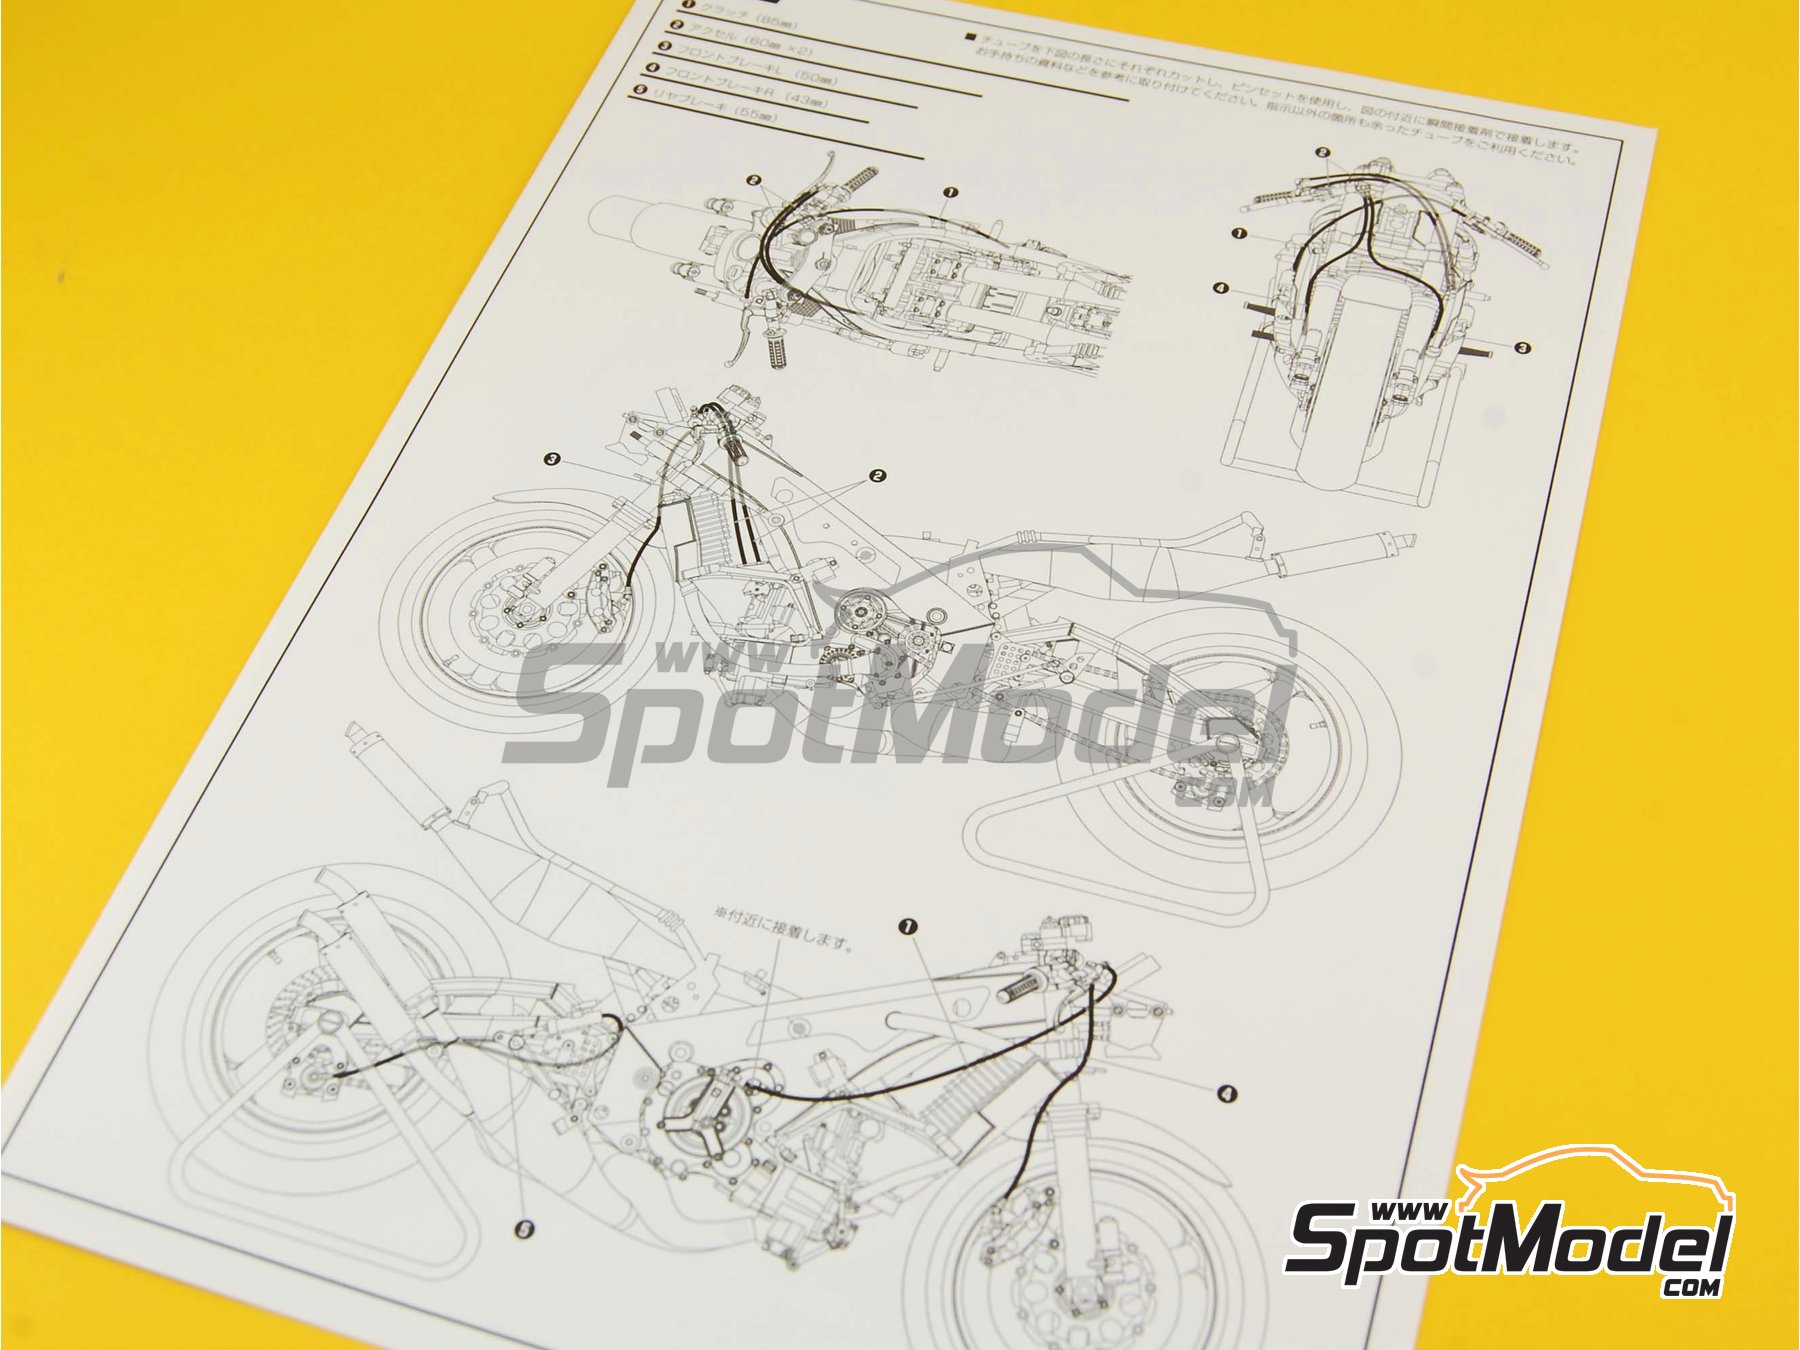 Fujimi 1/12 Scale Model Kit Team Pepsi Suzuki RGV-500 Gamma XR74 MotoGP '88 